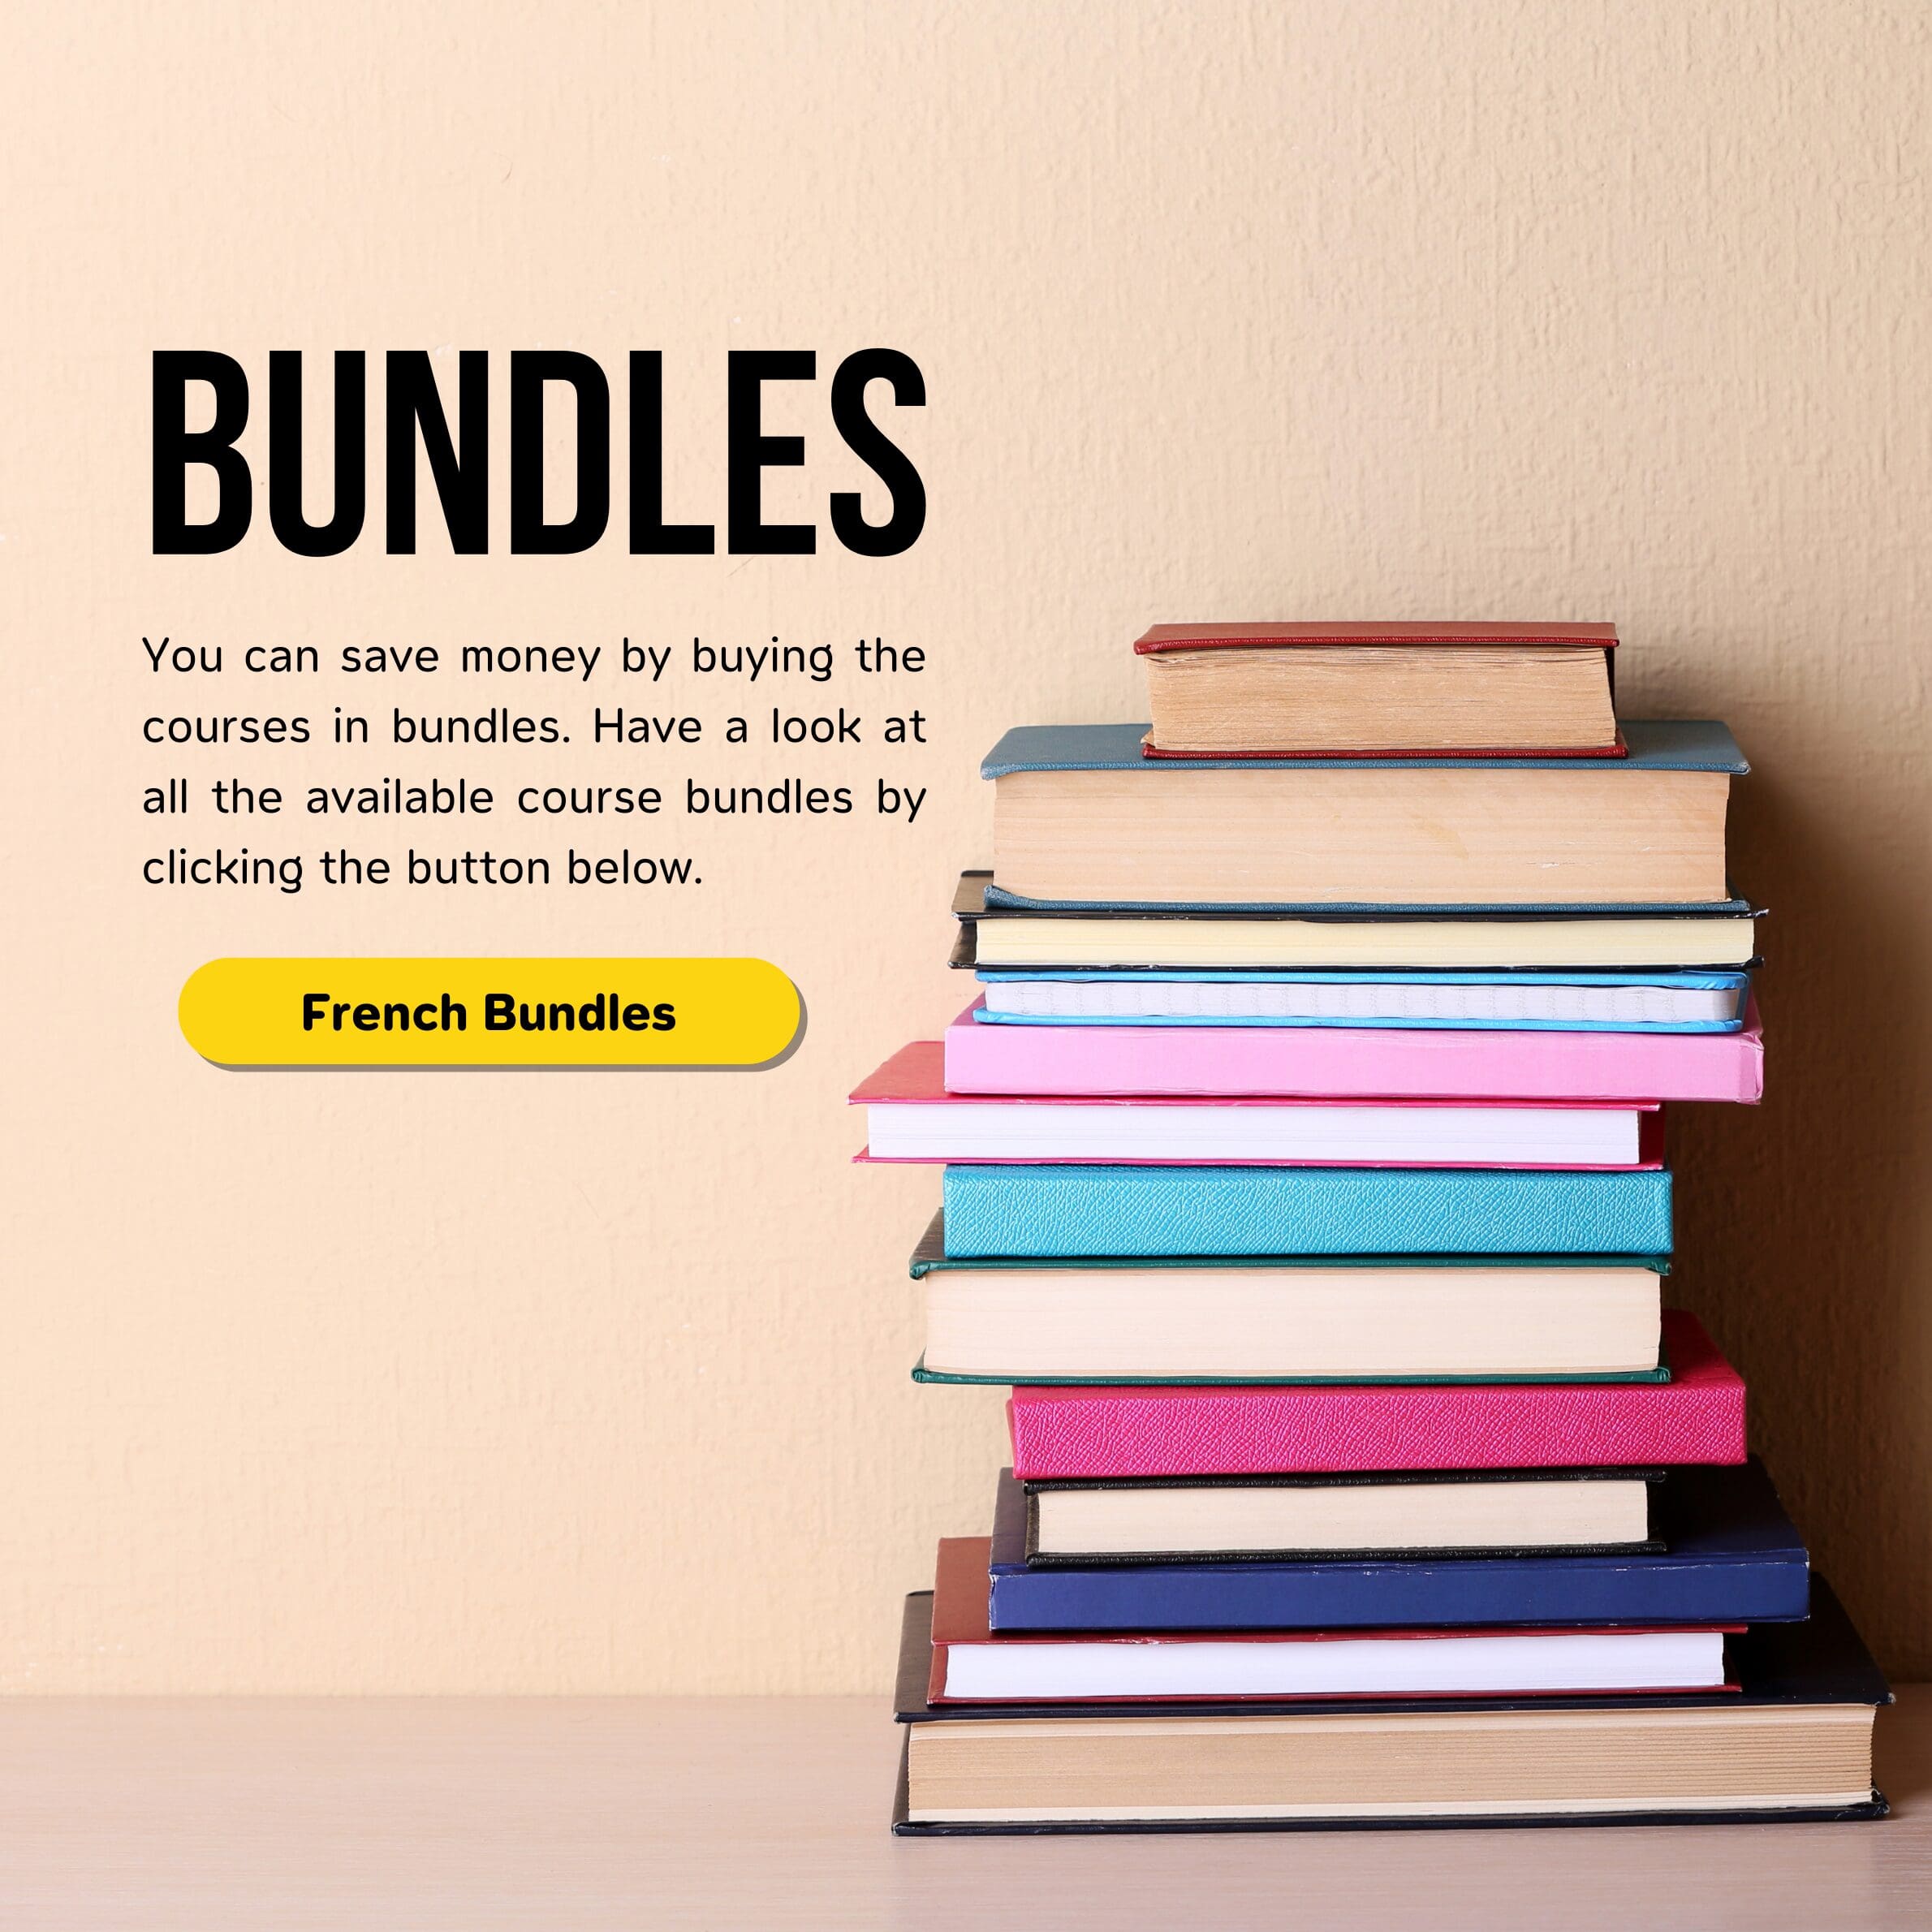 French bundles